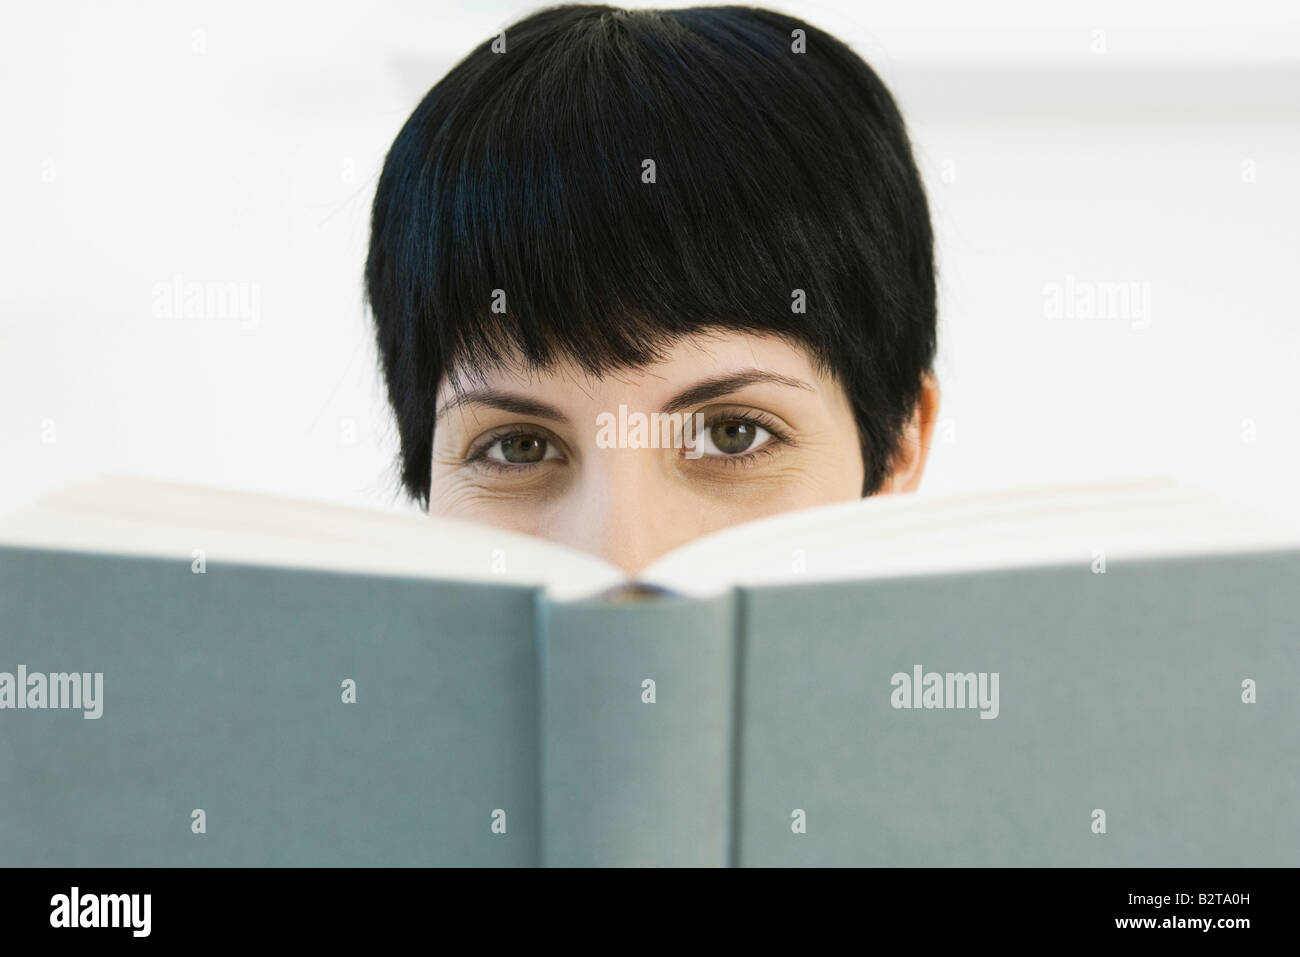 Woman peering over book at camera Stock Photo